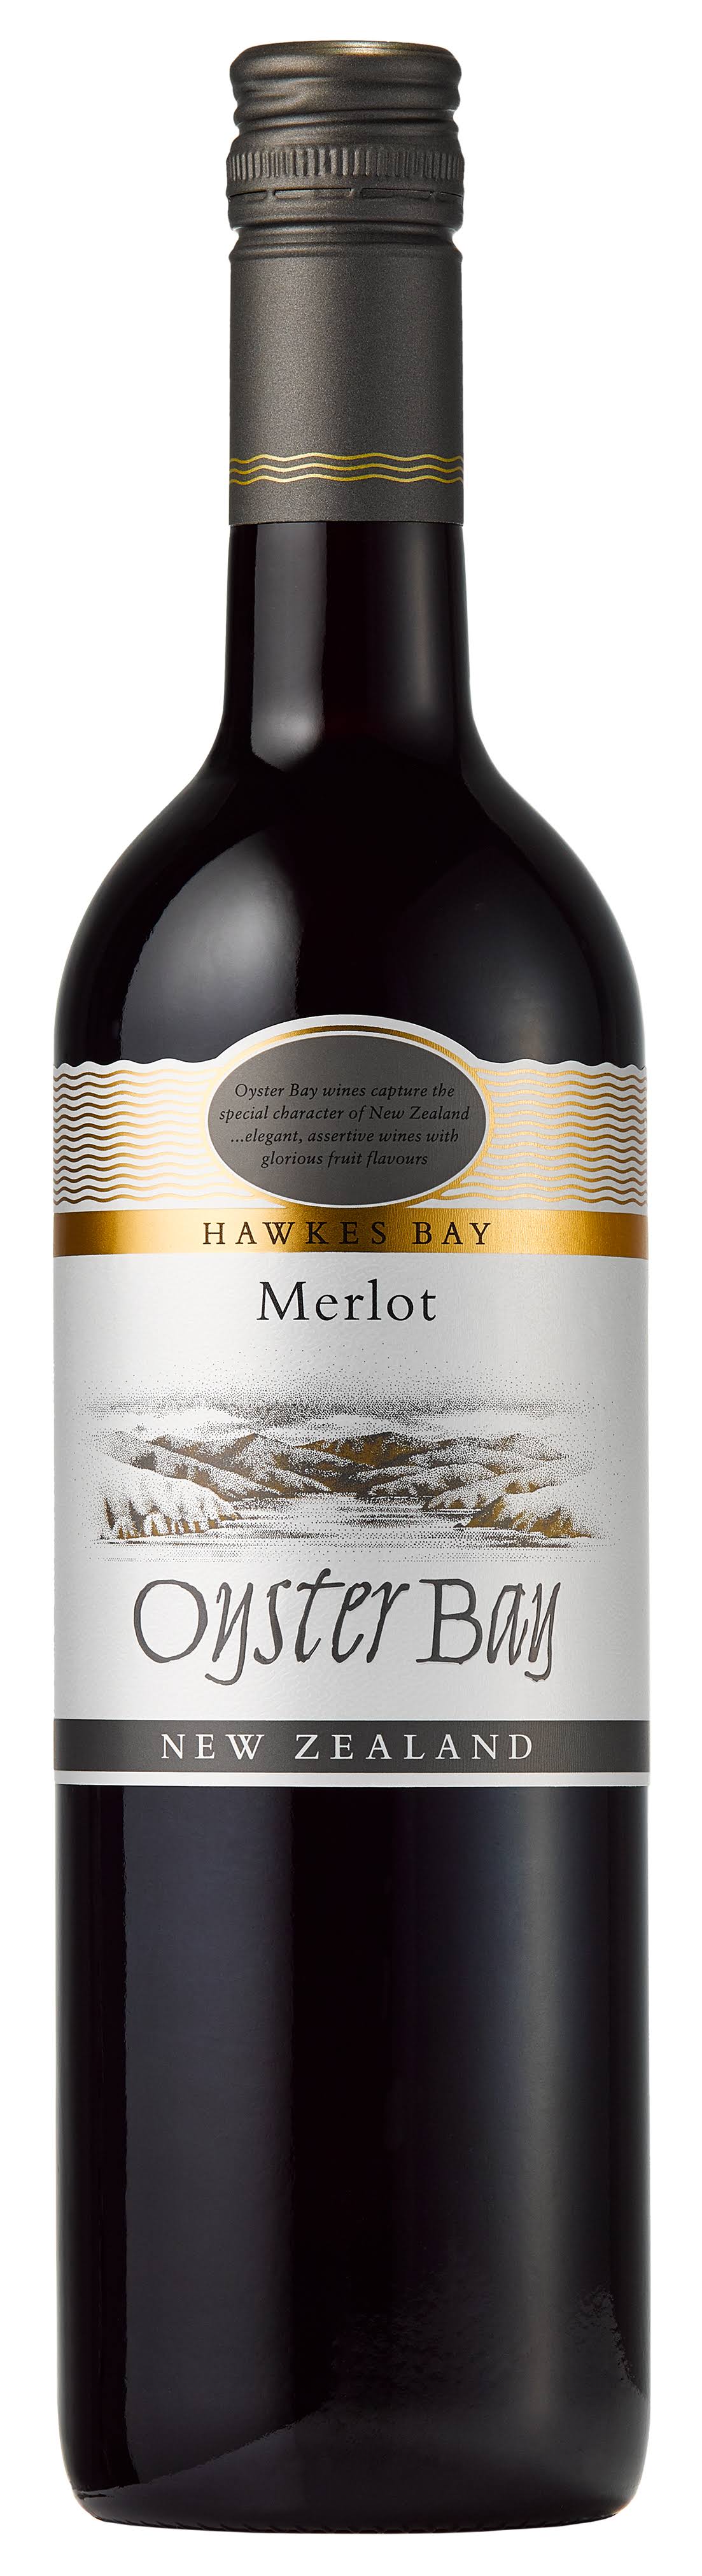 Oyster Bay Merlot Wine - New Zealand, 750ml